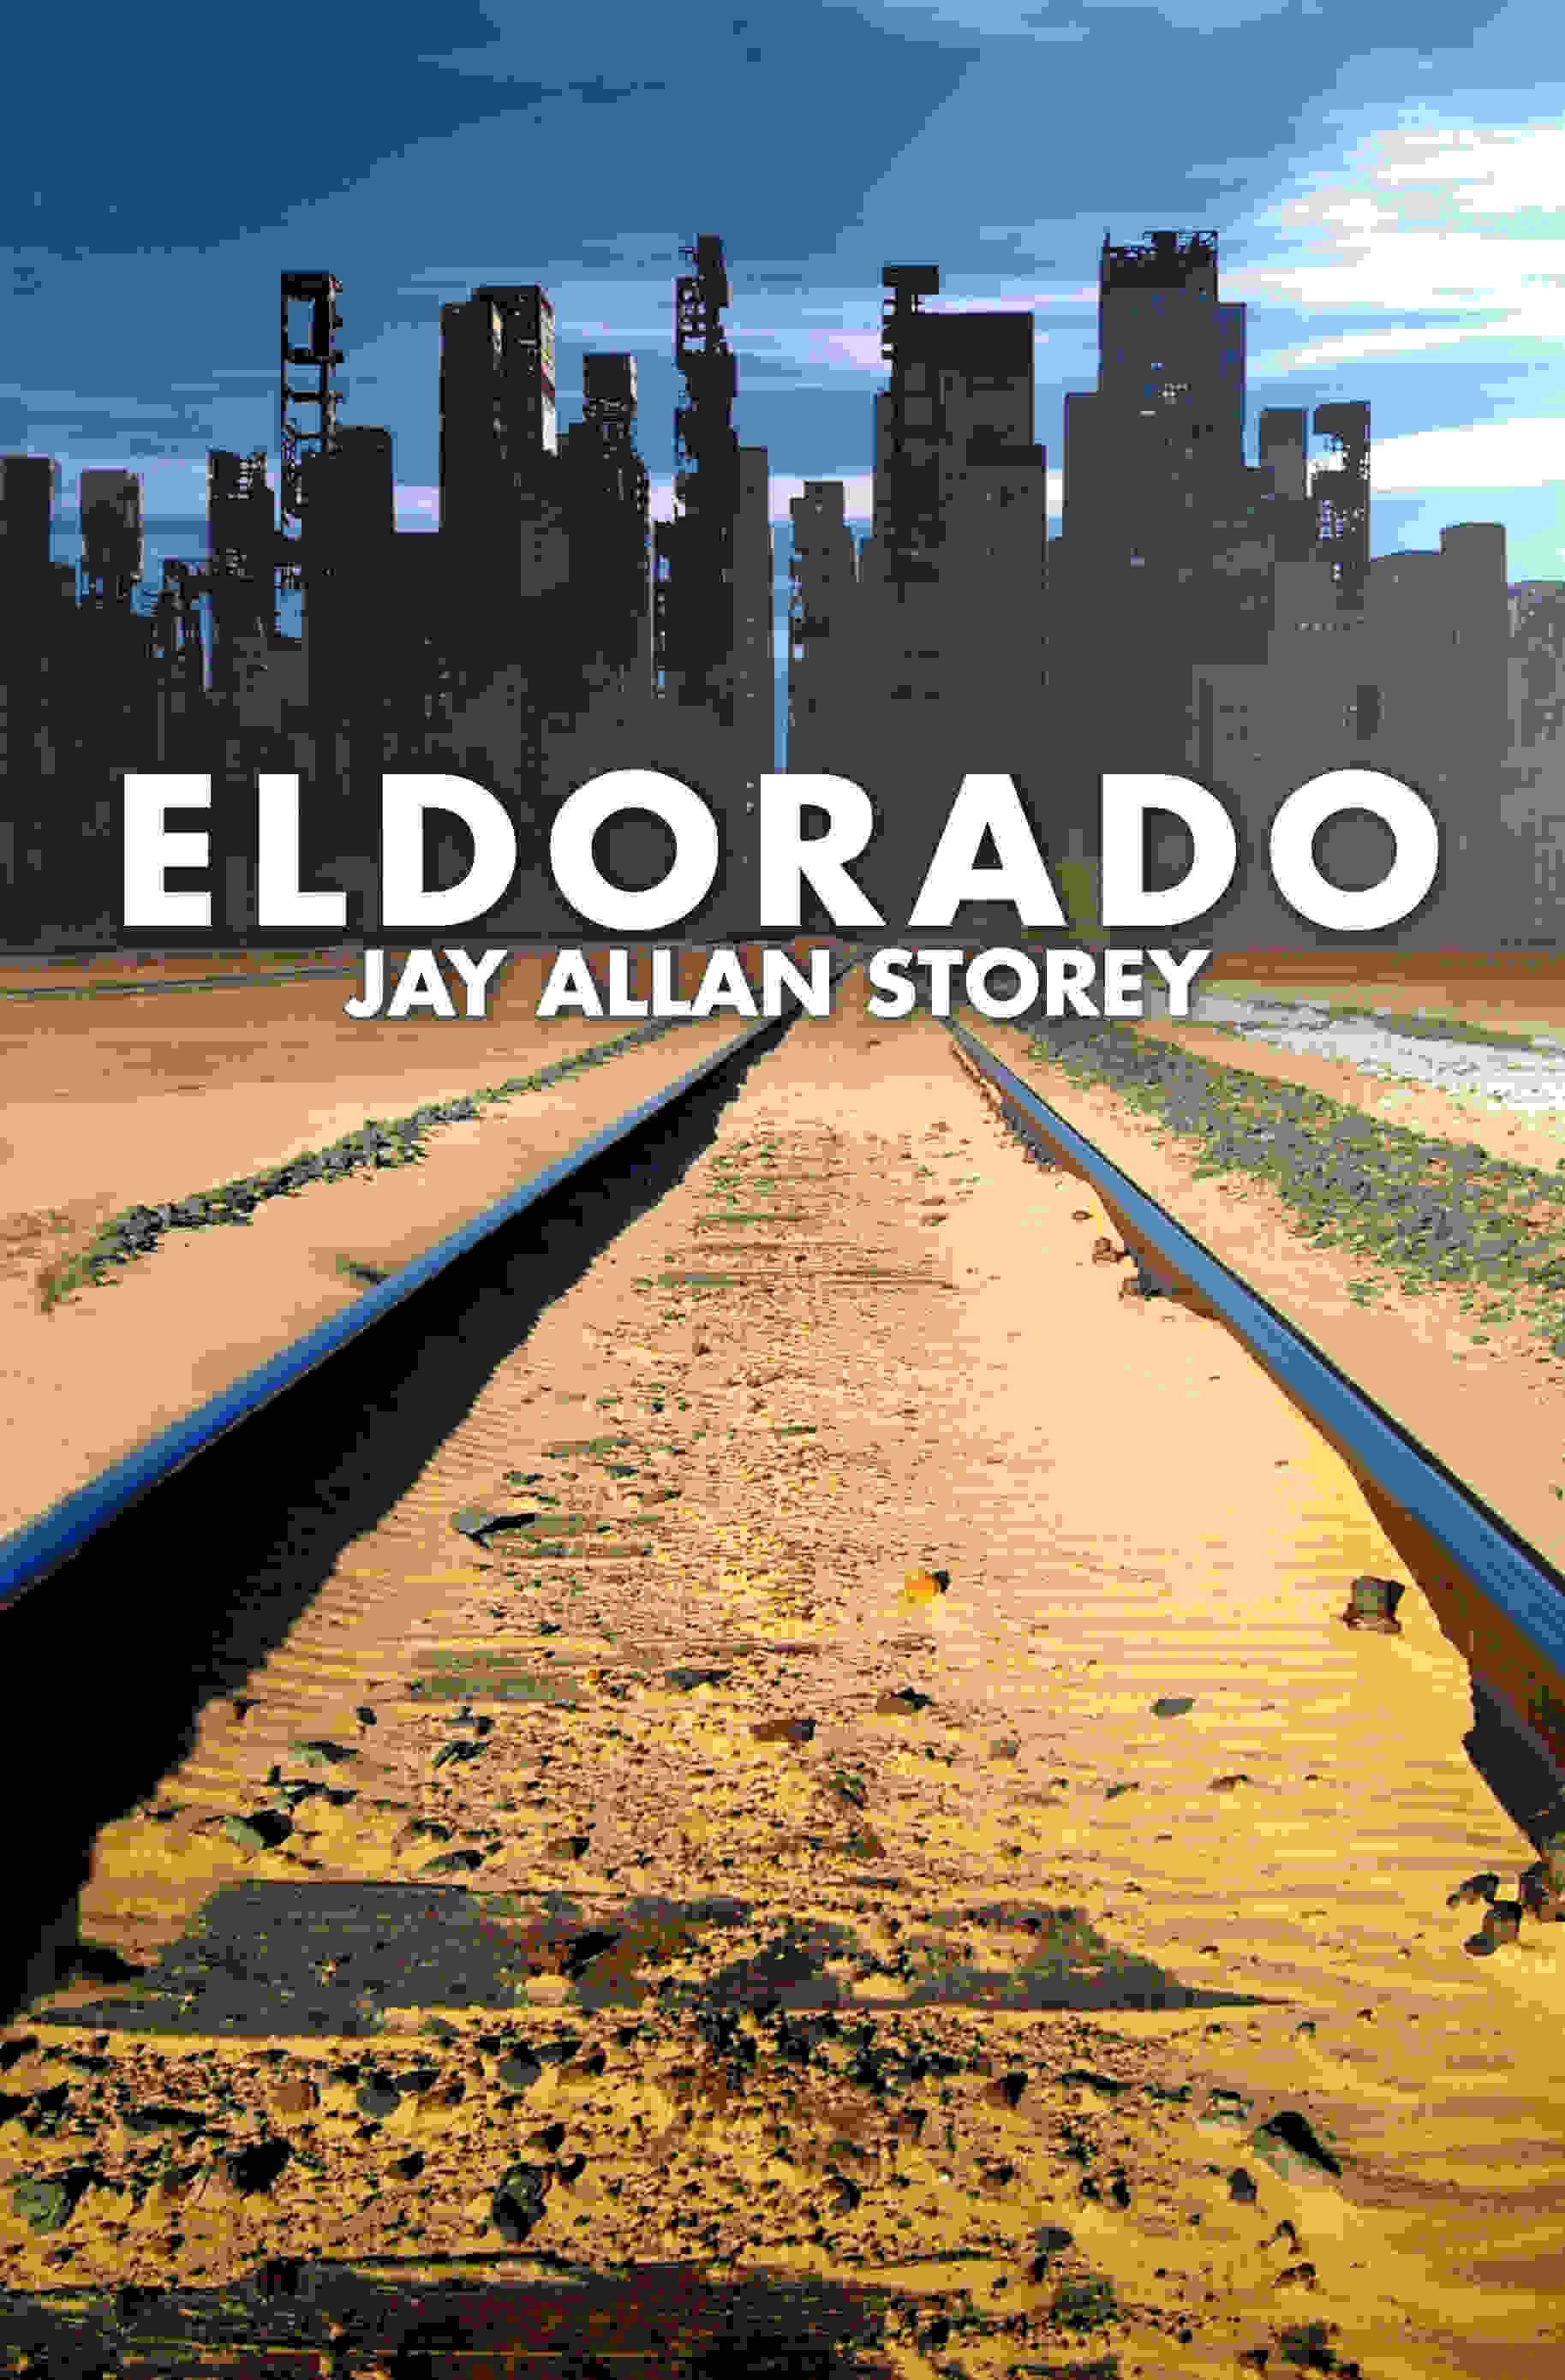 FREE: Eldorado by Jay Allan Storey